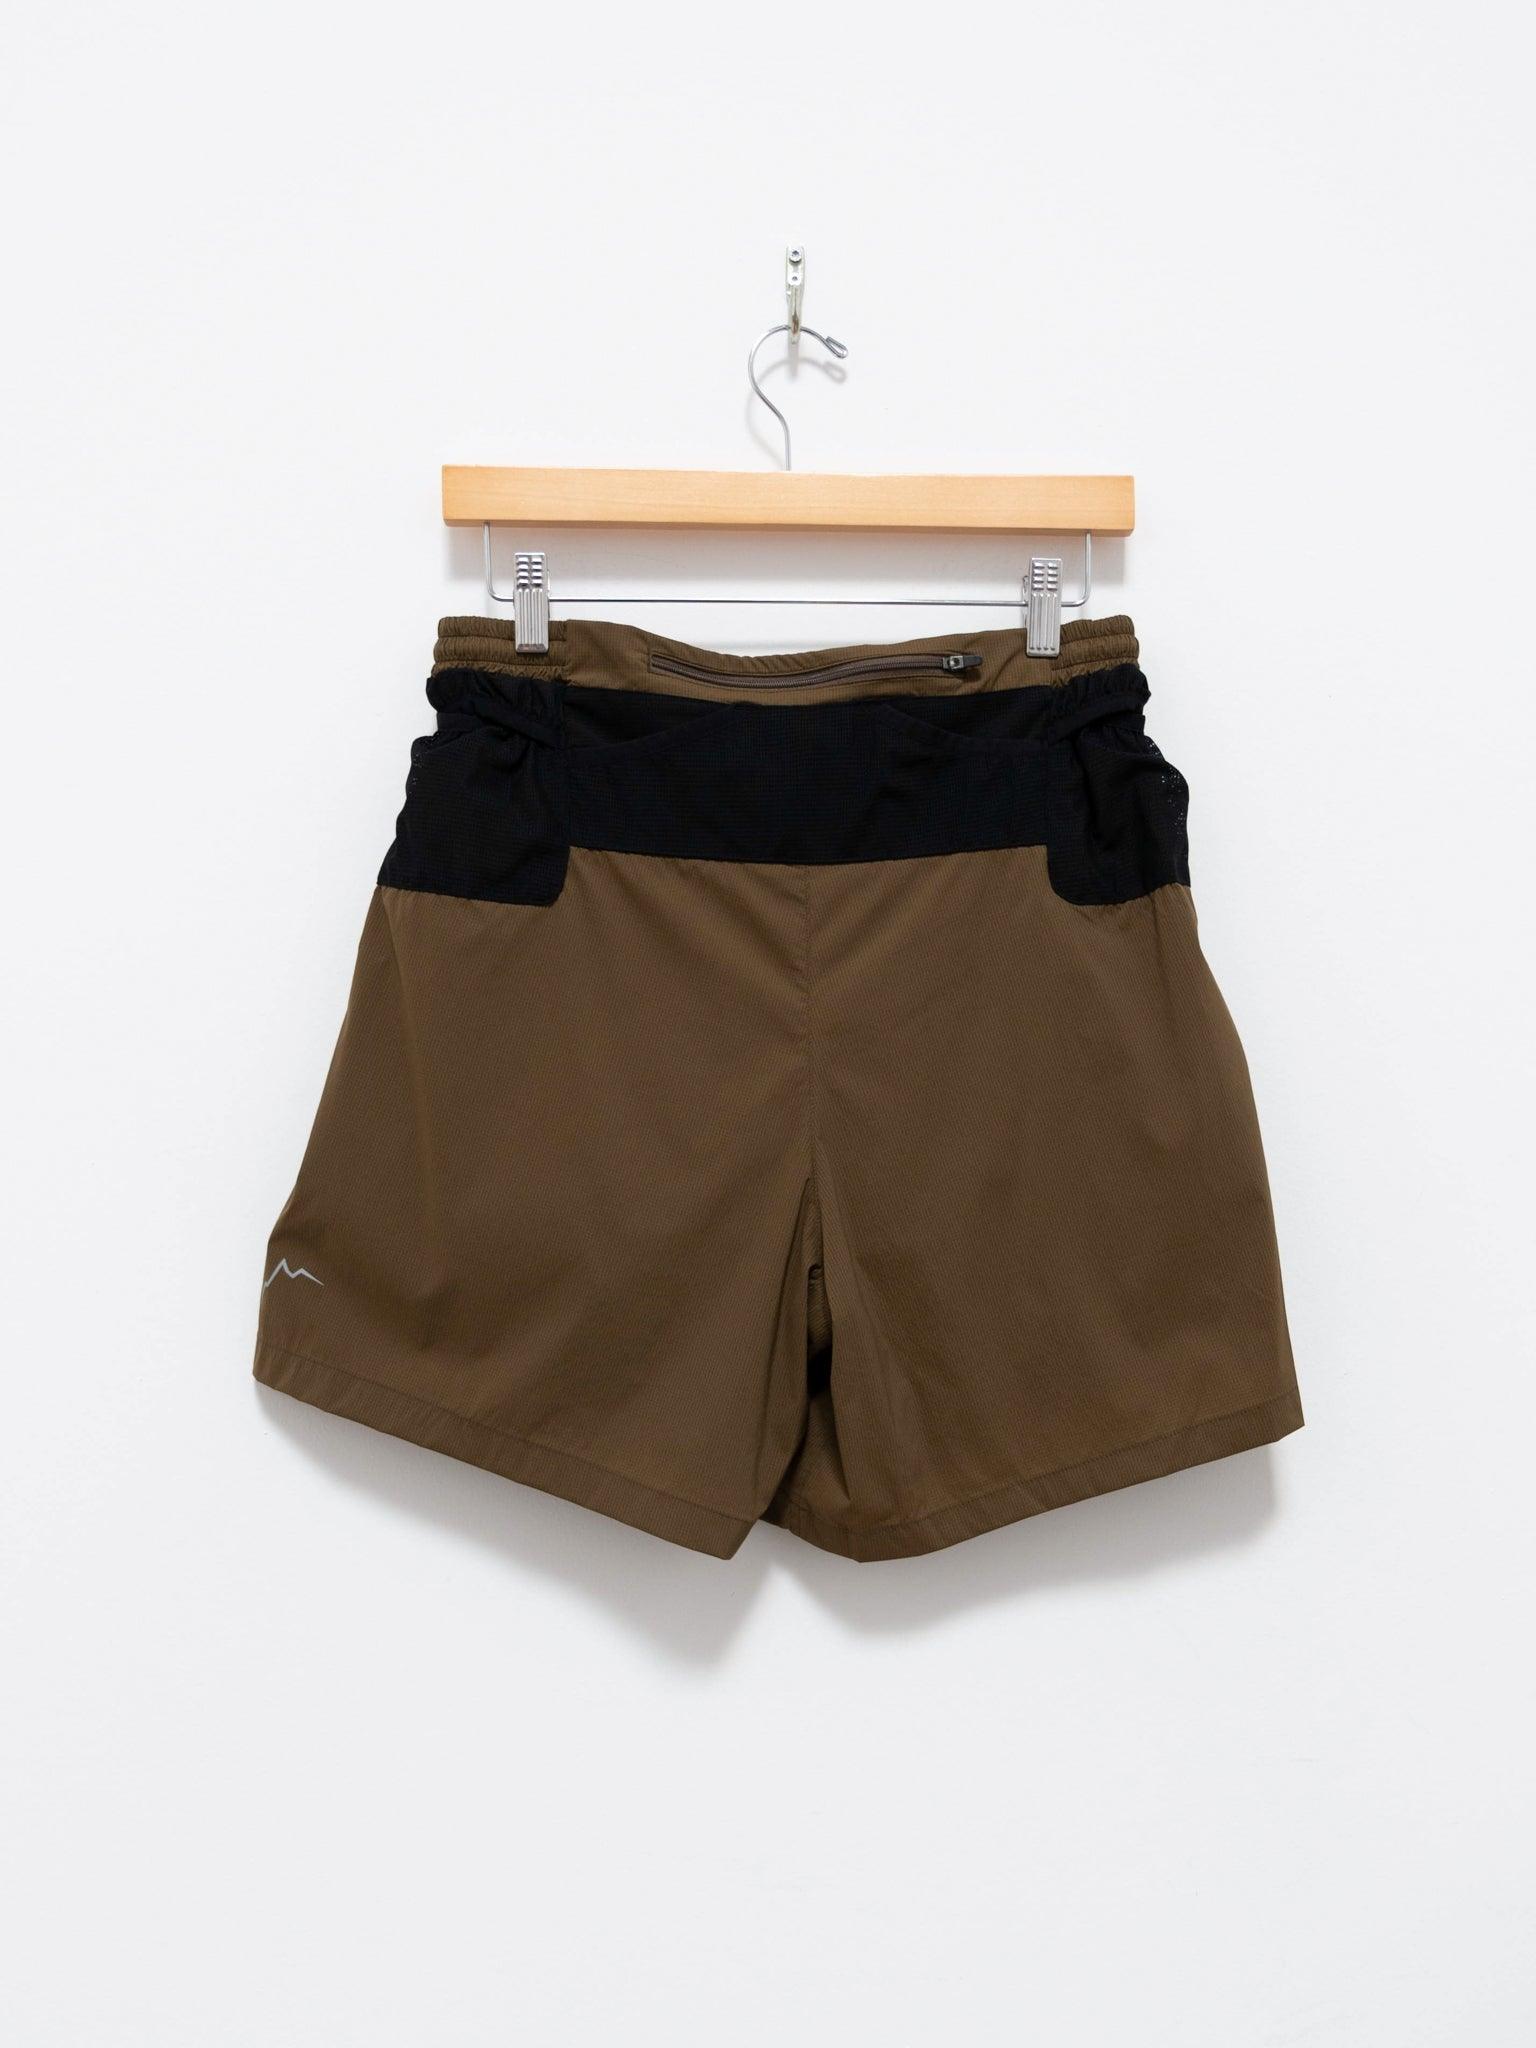 Namu Shop - CAYL Nylon Trail Shorts - Brown Khaki